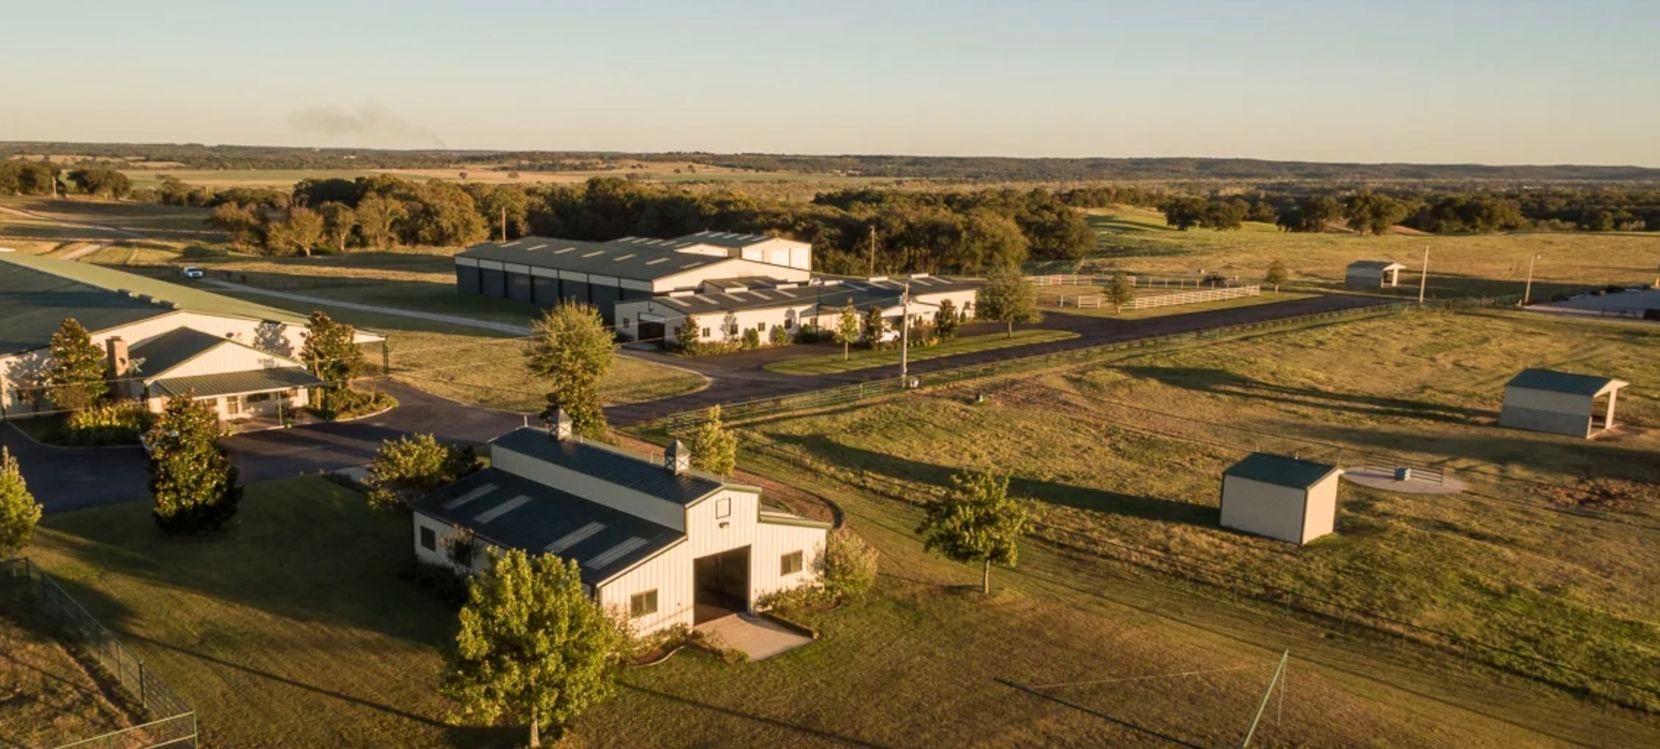 Terry Bradshaw's Oklahoma ranch was a quarter Horse breeding operation.